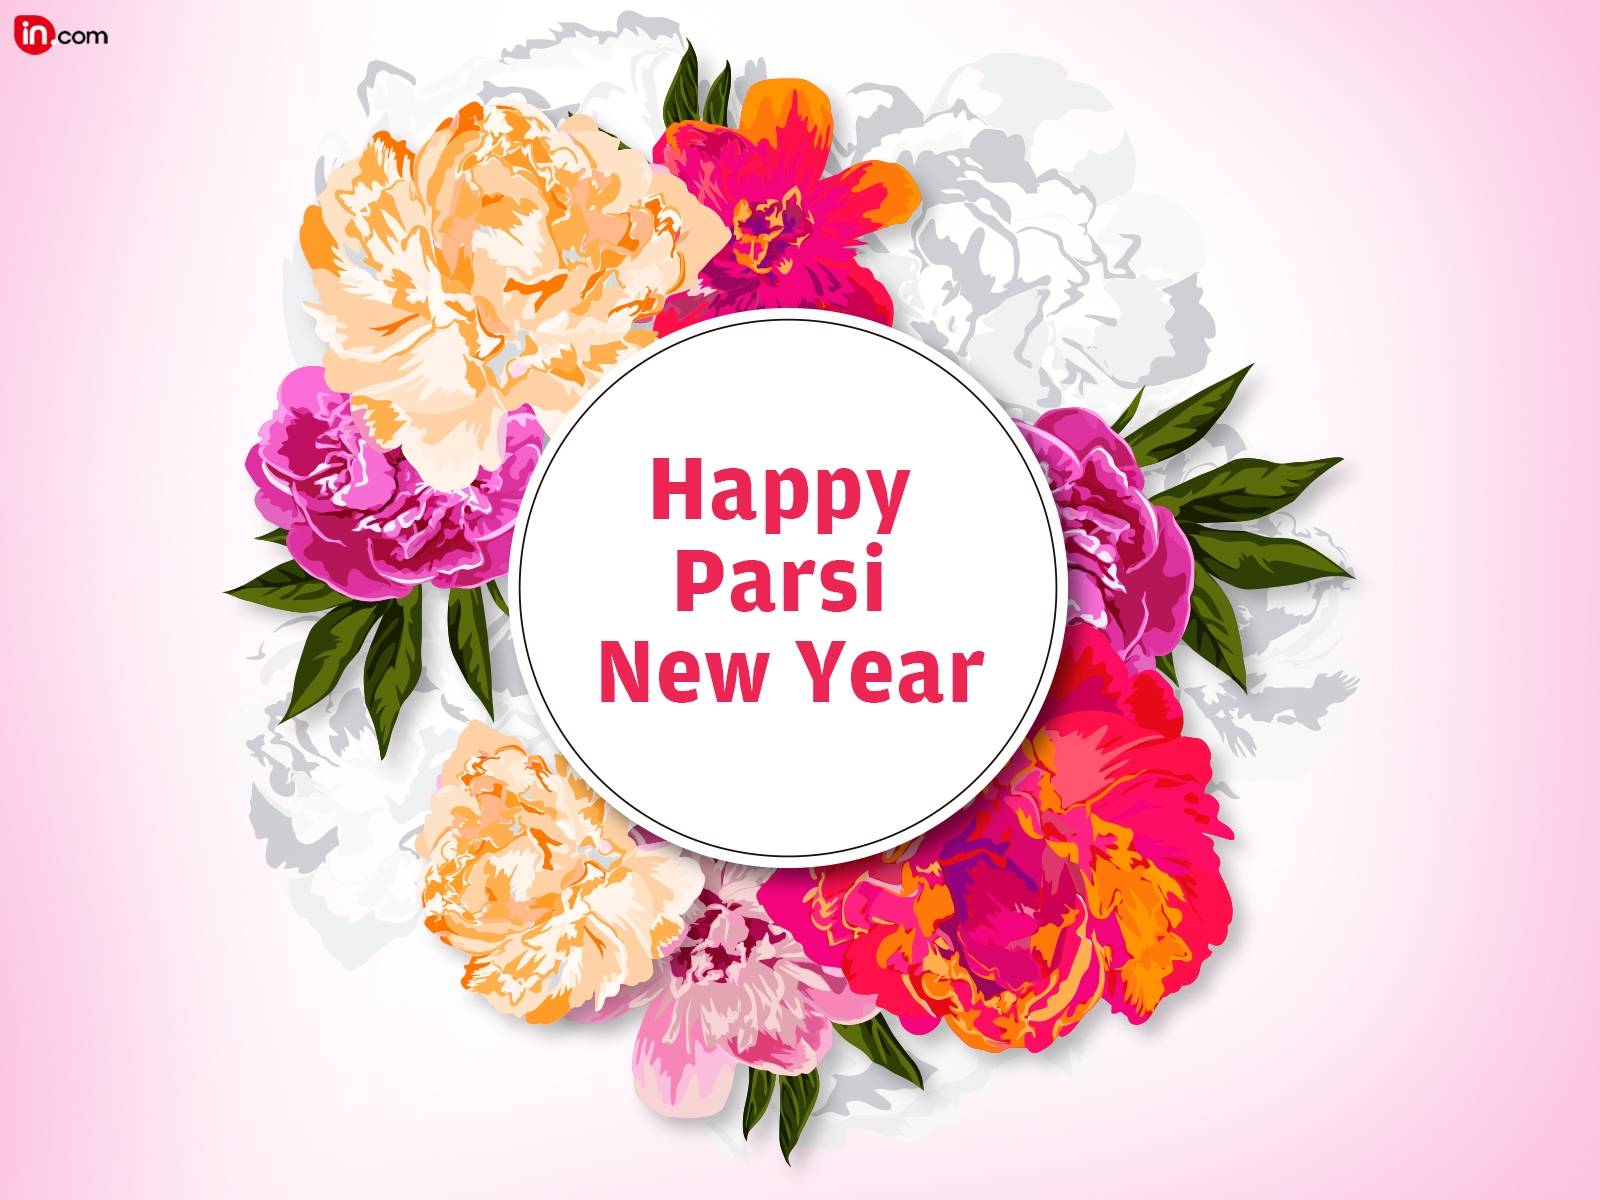 Parsi New Year Quotes , पारसी न्यू ईयर पर कोट्स 2018 , Parsi New Year Quotes In Hindi , पारसी न्यू ईयर पर कोट्स , Happy Parsi New Year 2018